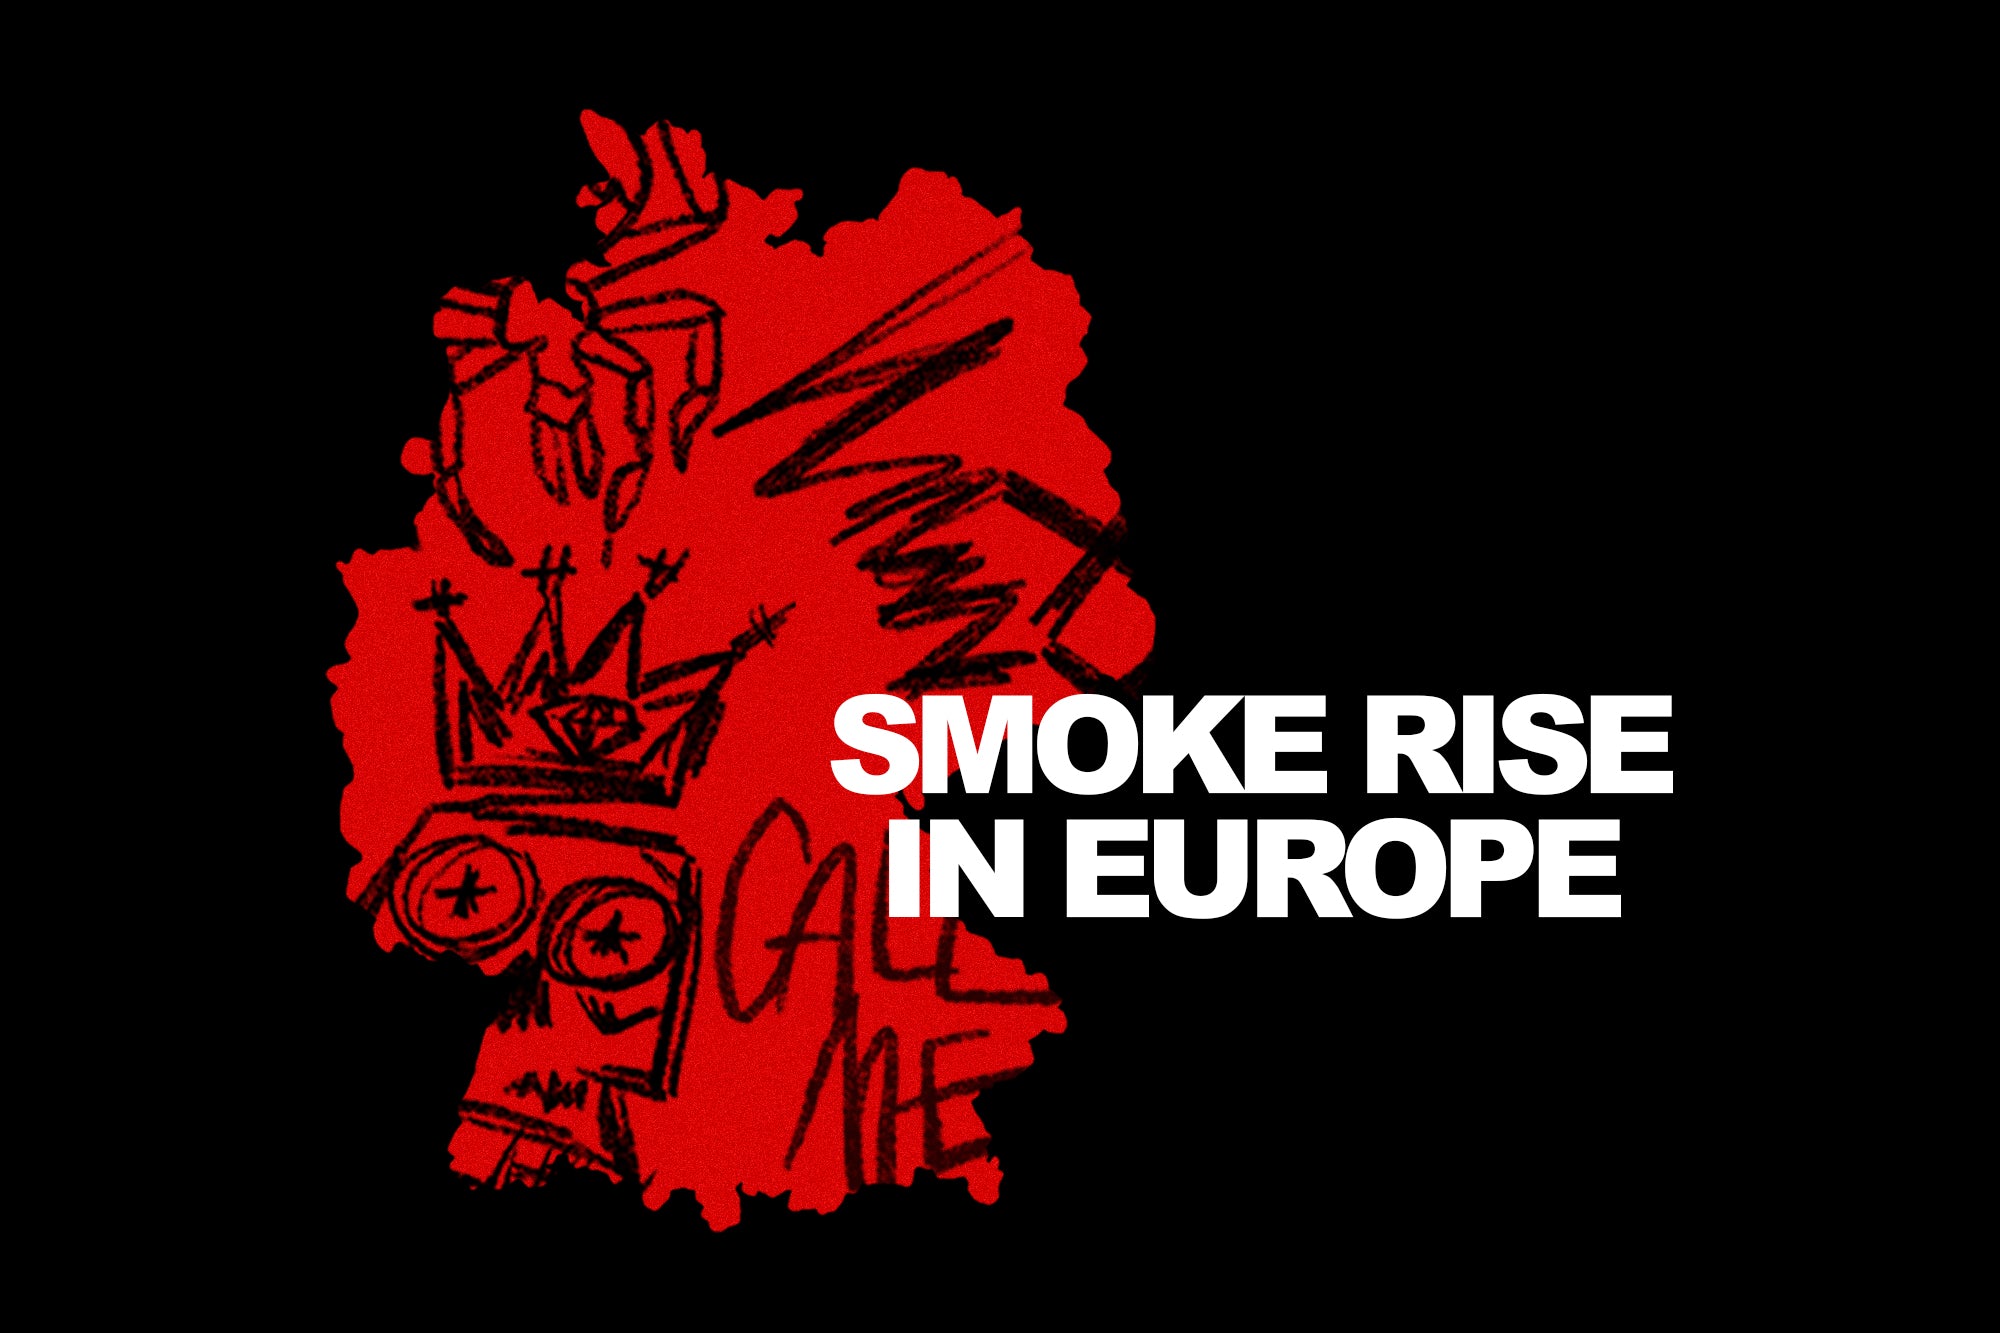 Smoke rise in Europe